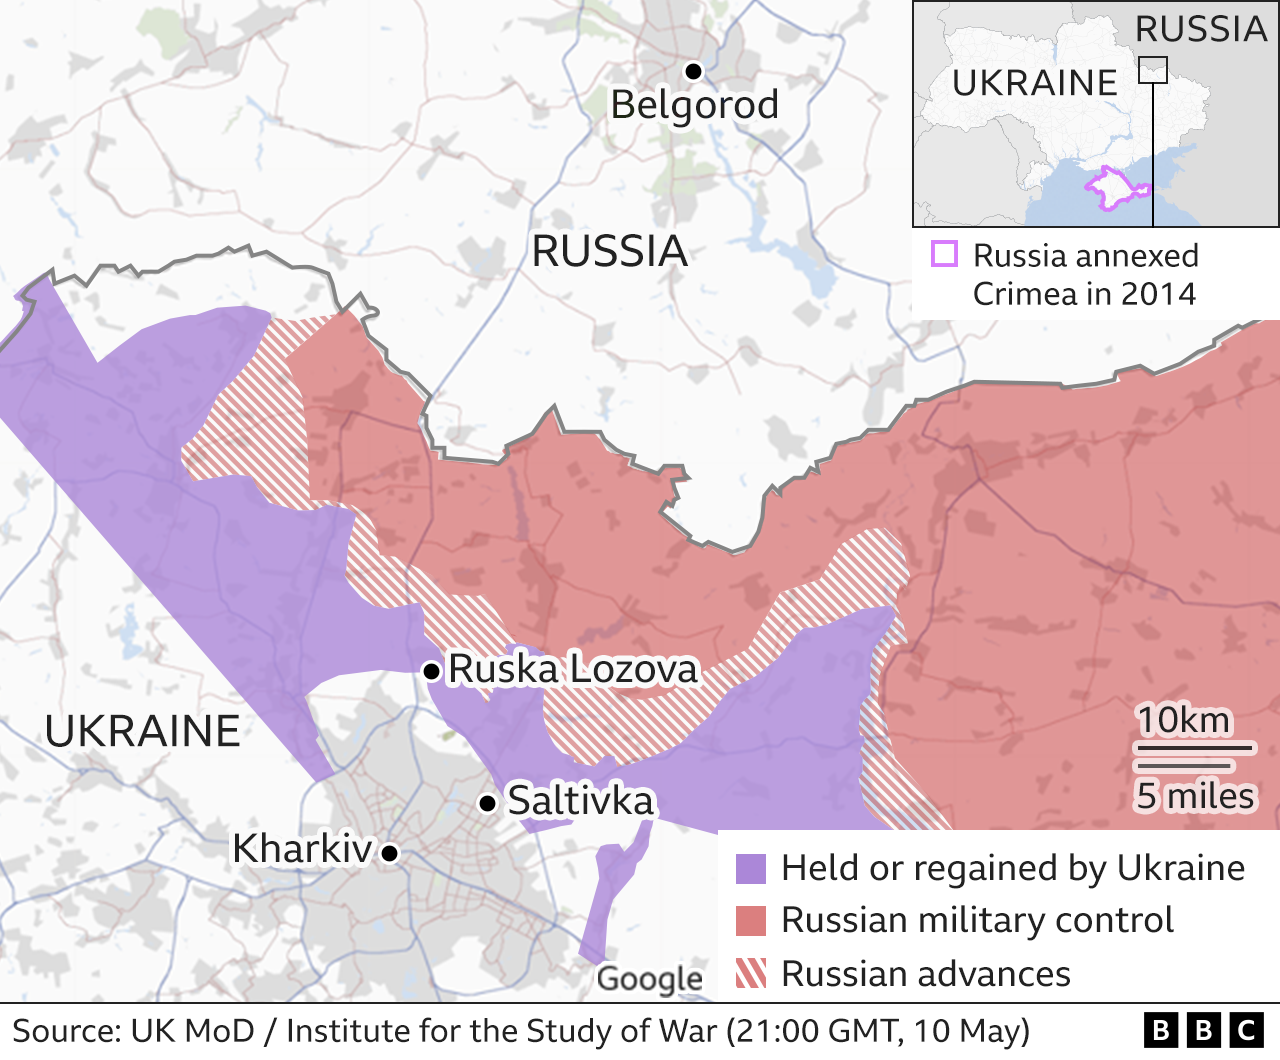 Map of the area around Kharkiv and Belgorod along the Ukrainian/Russian border